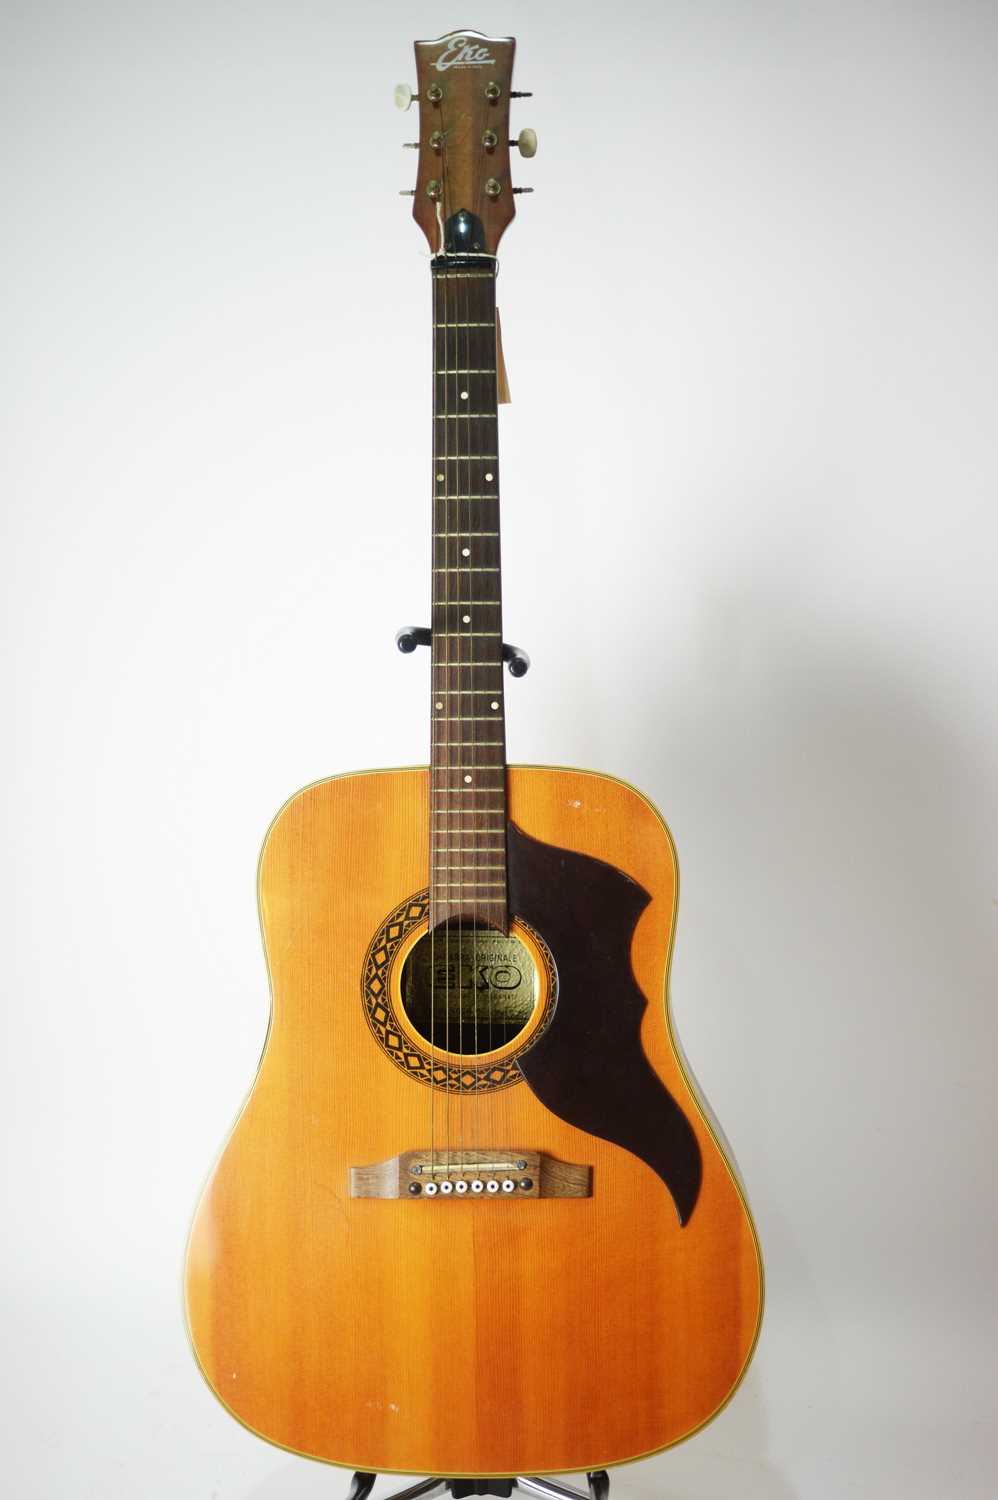 Lot 766 - Eko Ranger 6 Guitar